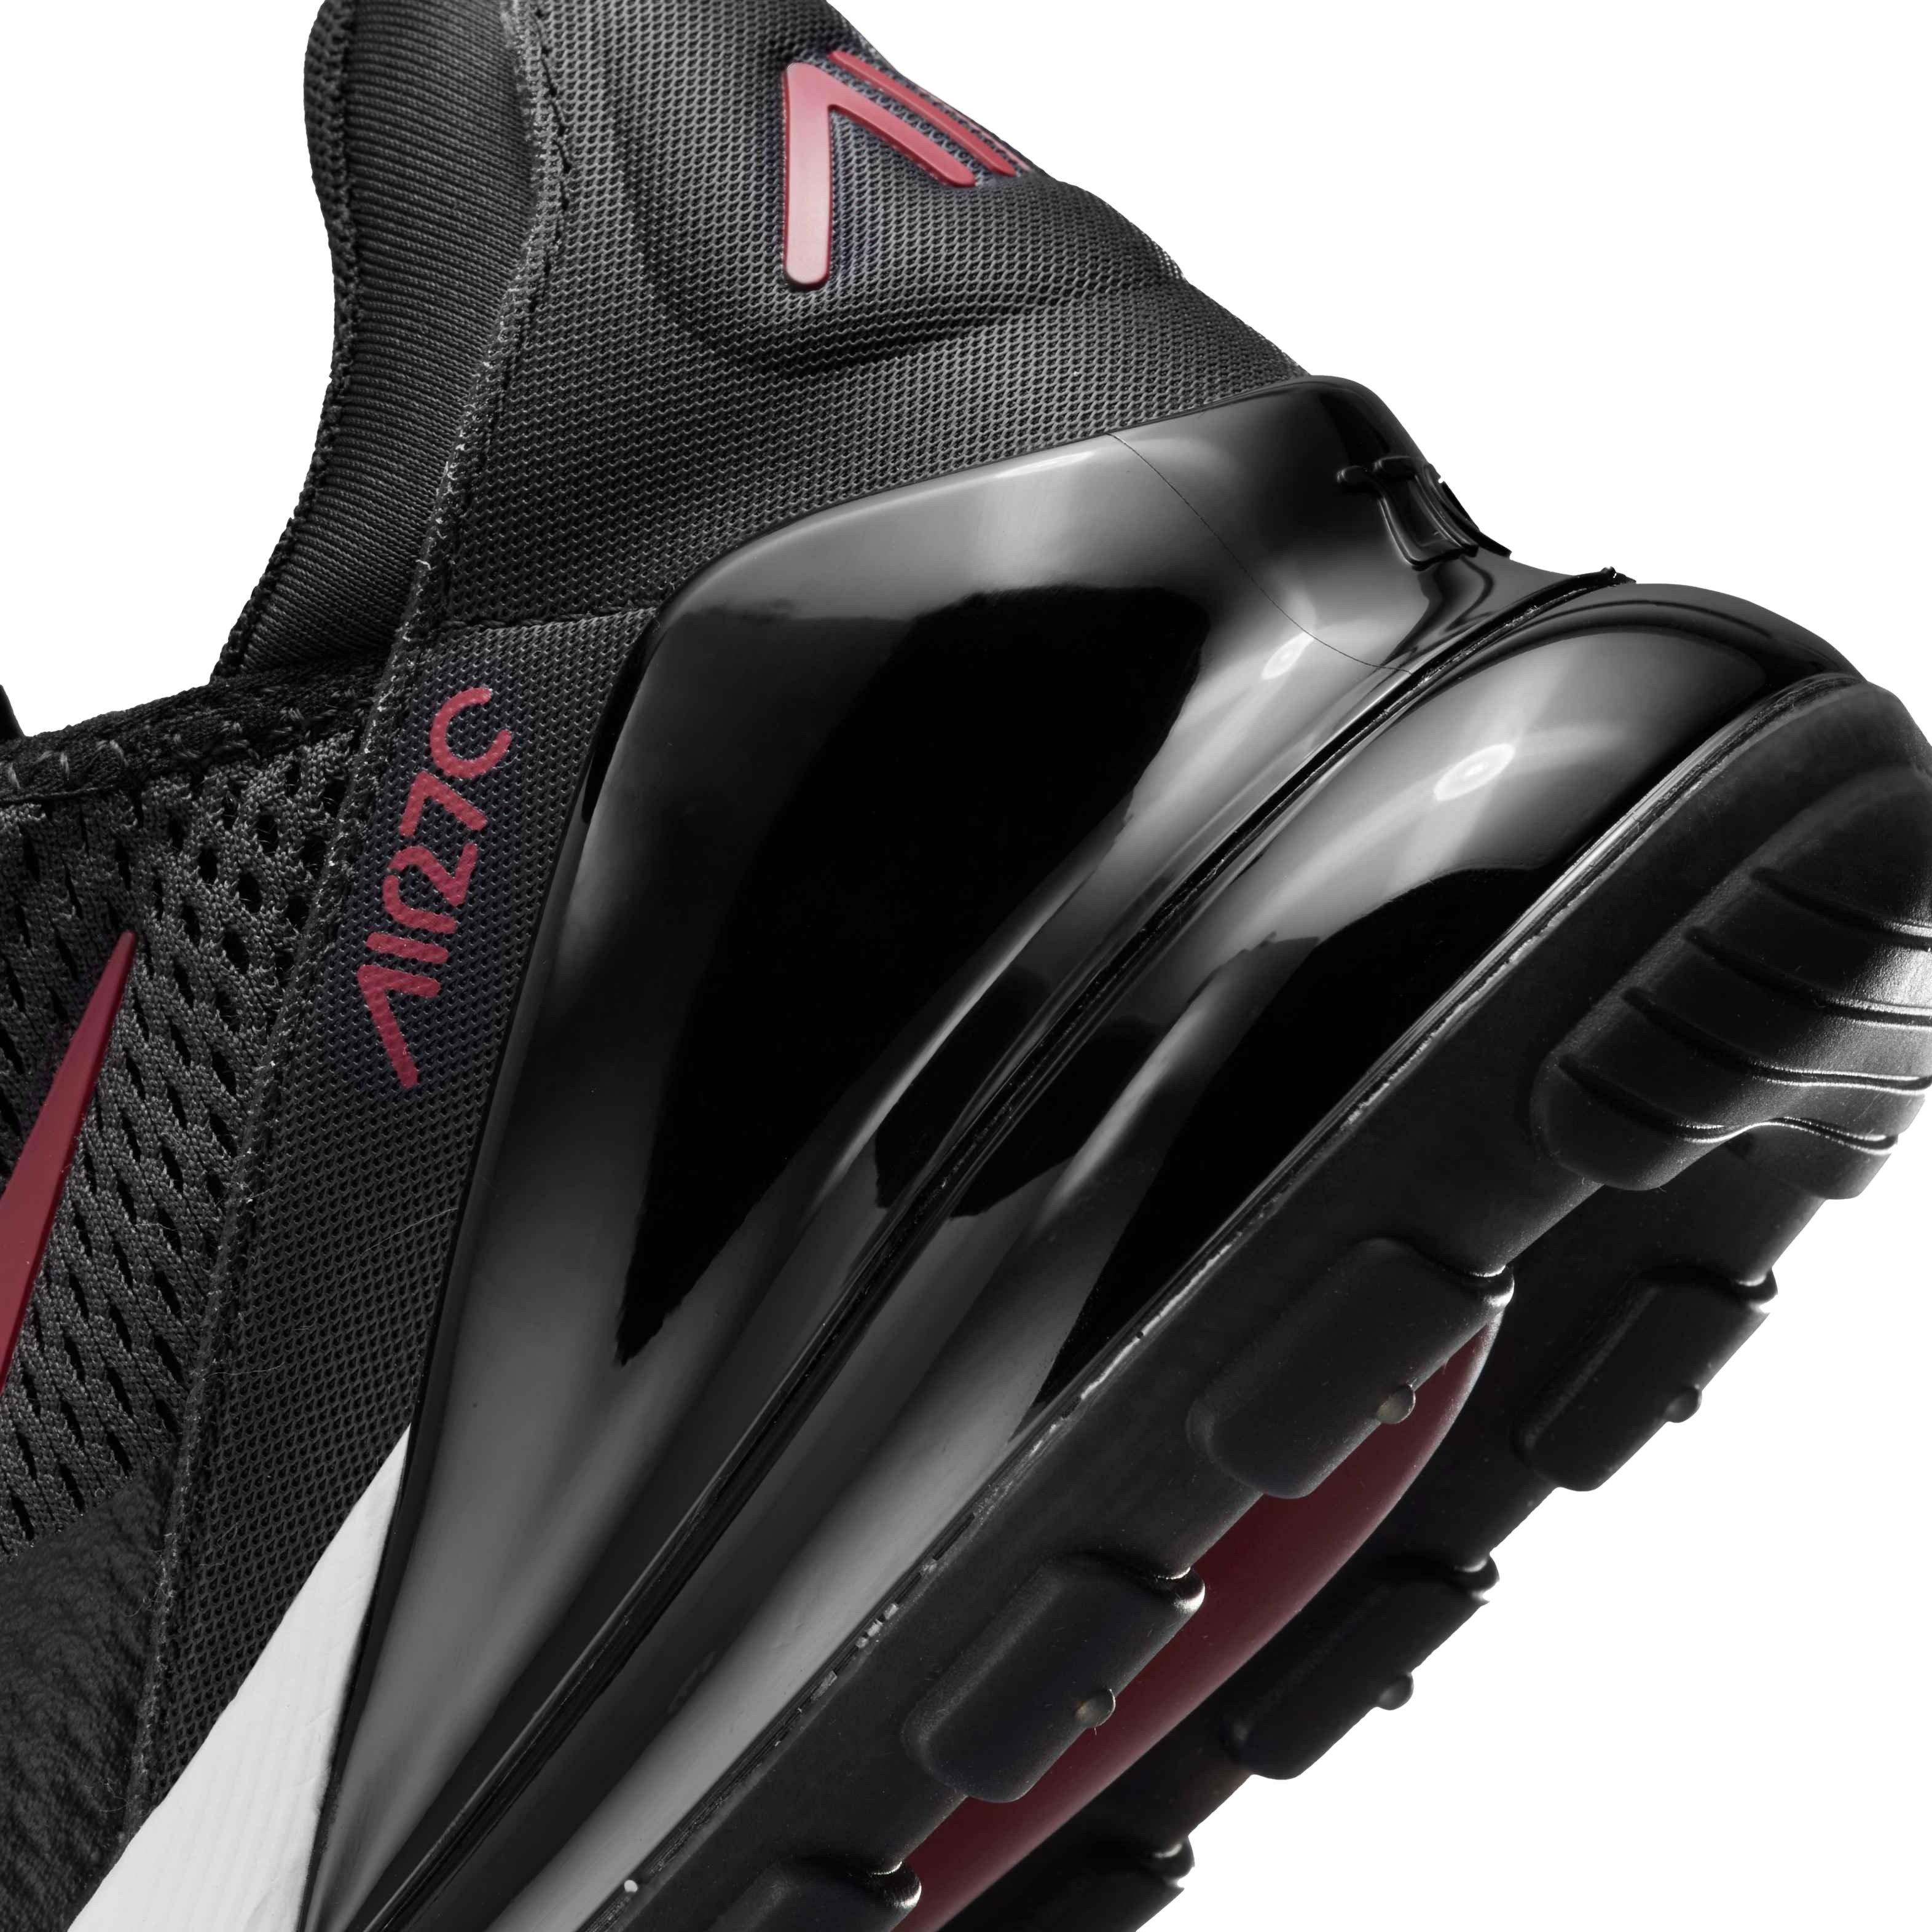 Nike Air Max 270 in Black, White & University Red - EUKICKS